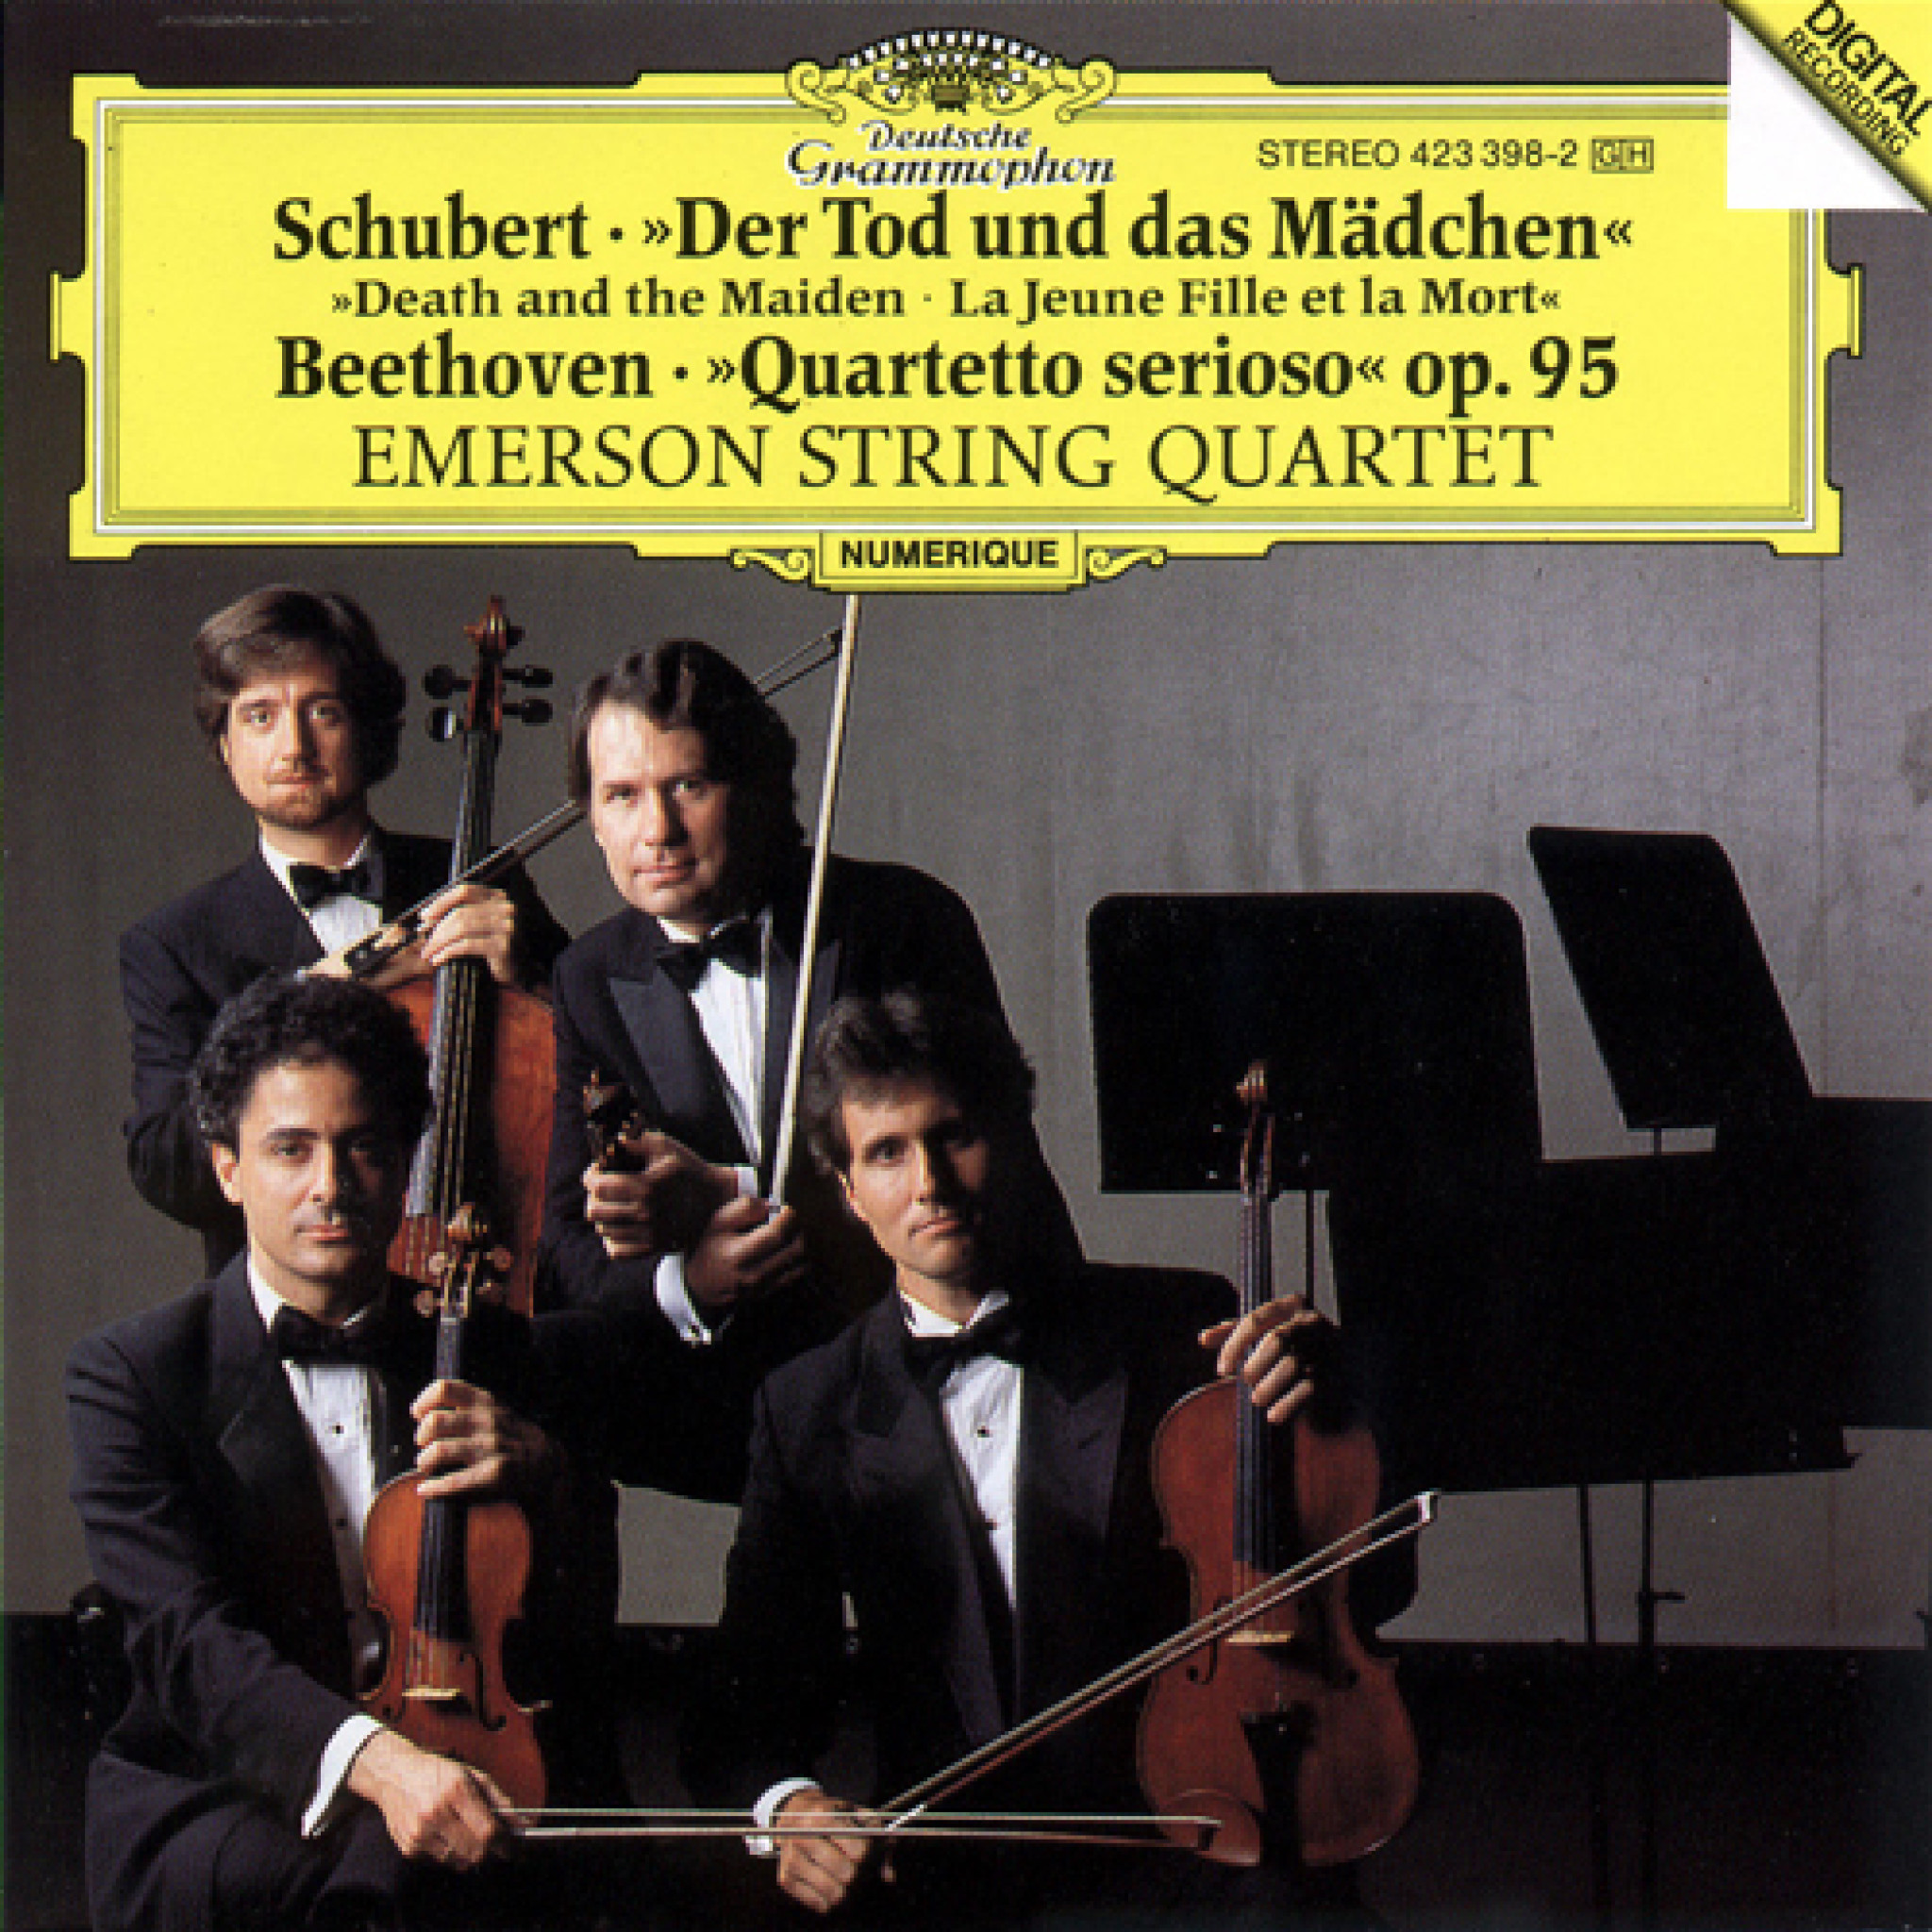 Schubert: "Death and the Maiden" / Beethoven: "Quartetto serioso"